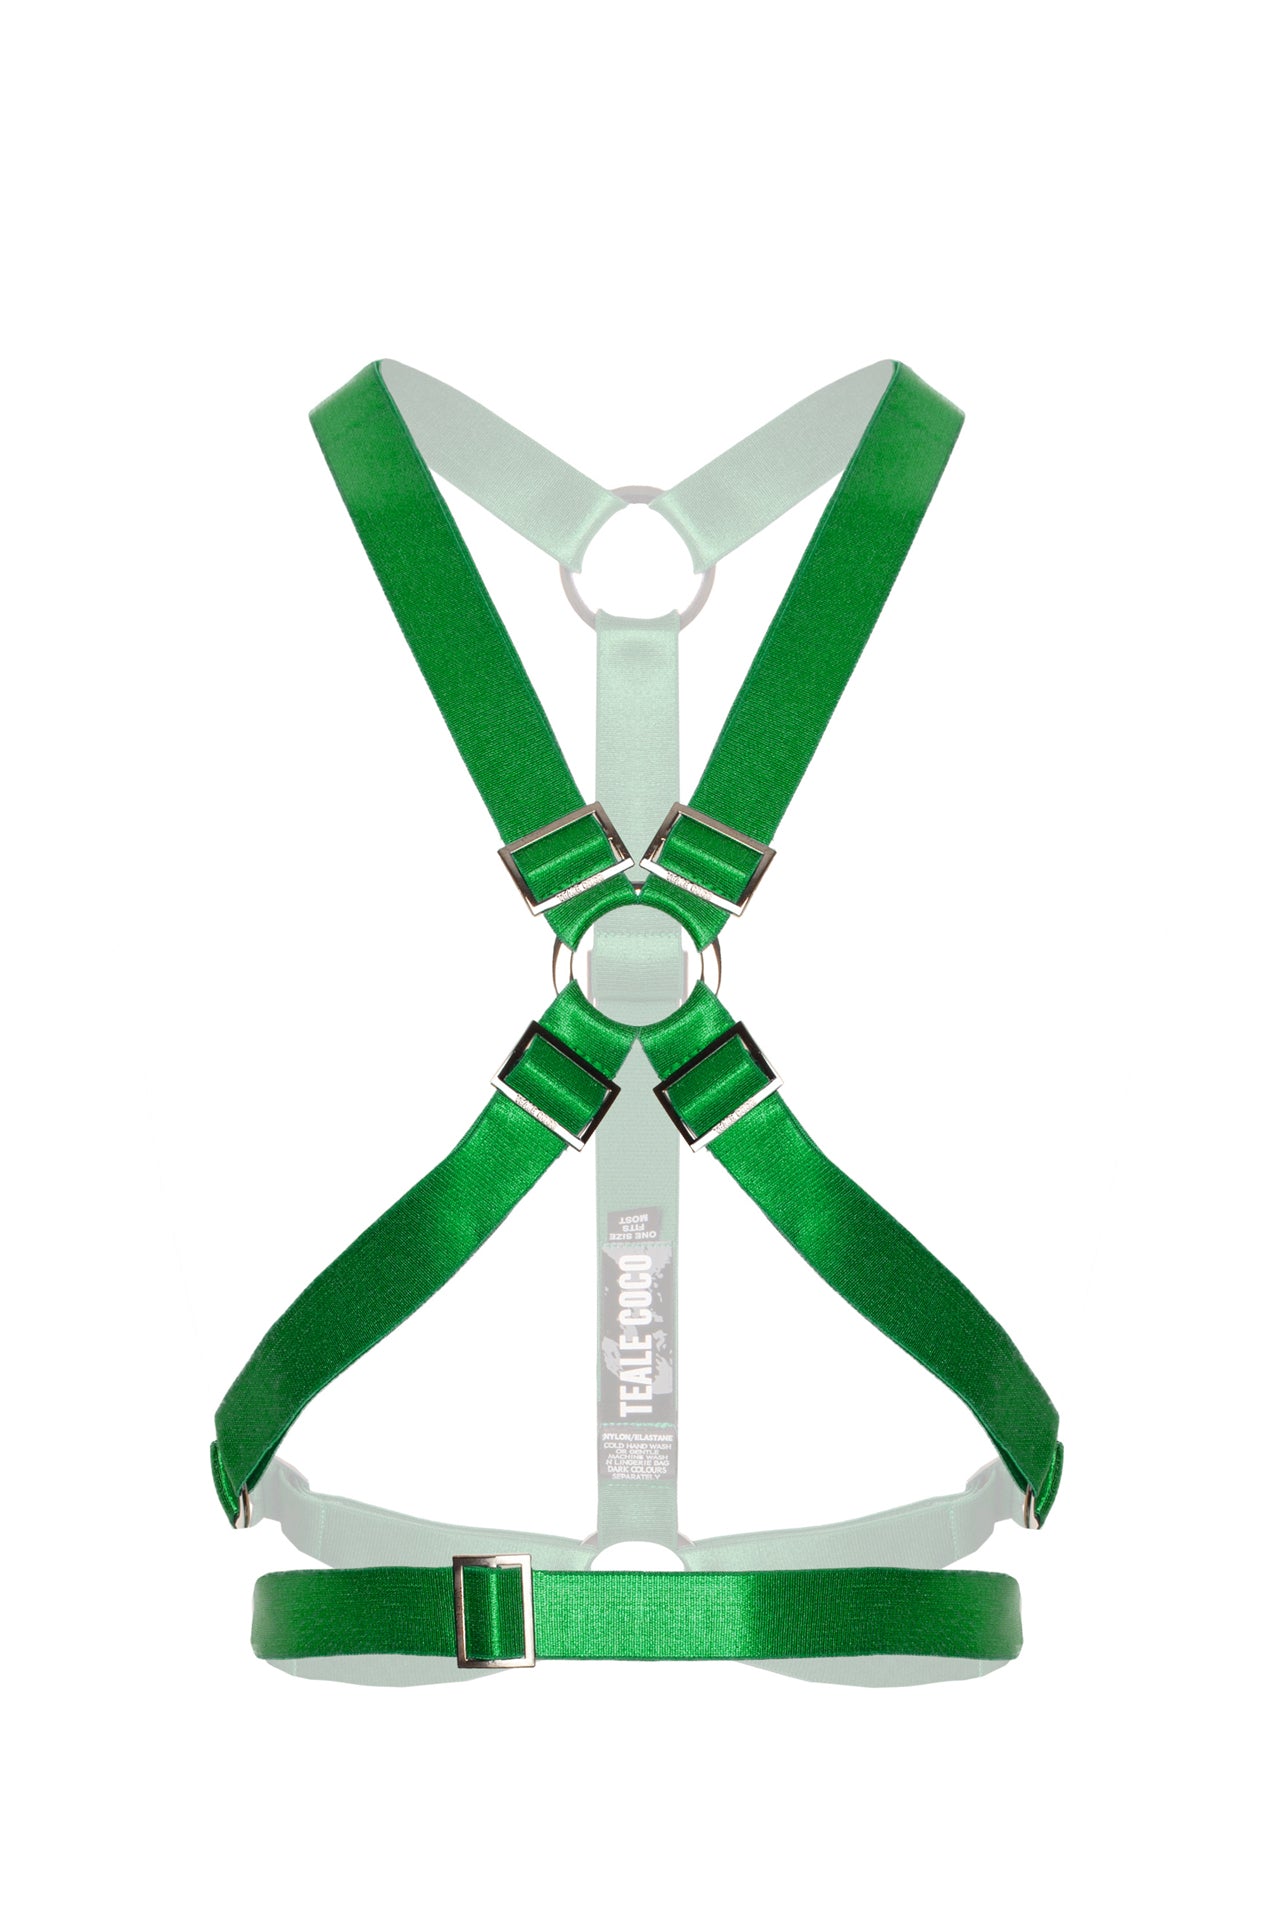 X Crop Harness (Green)